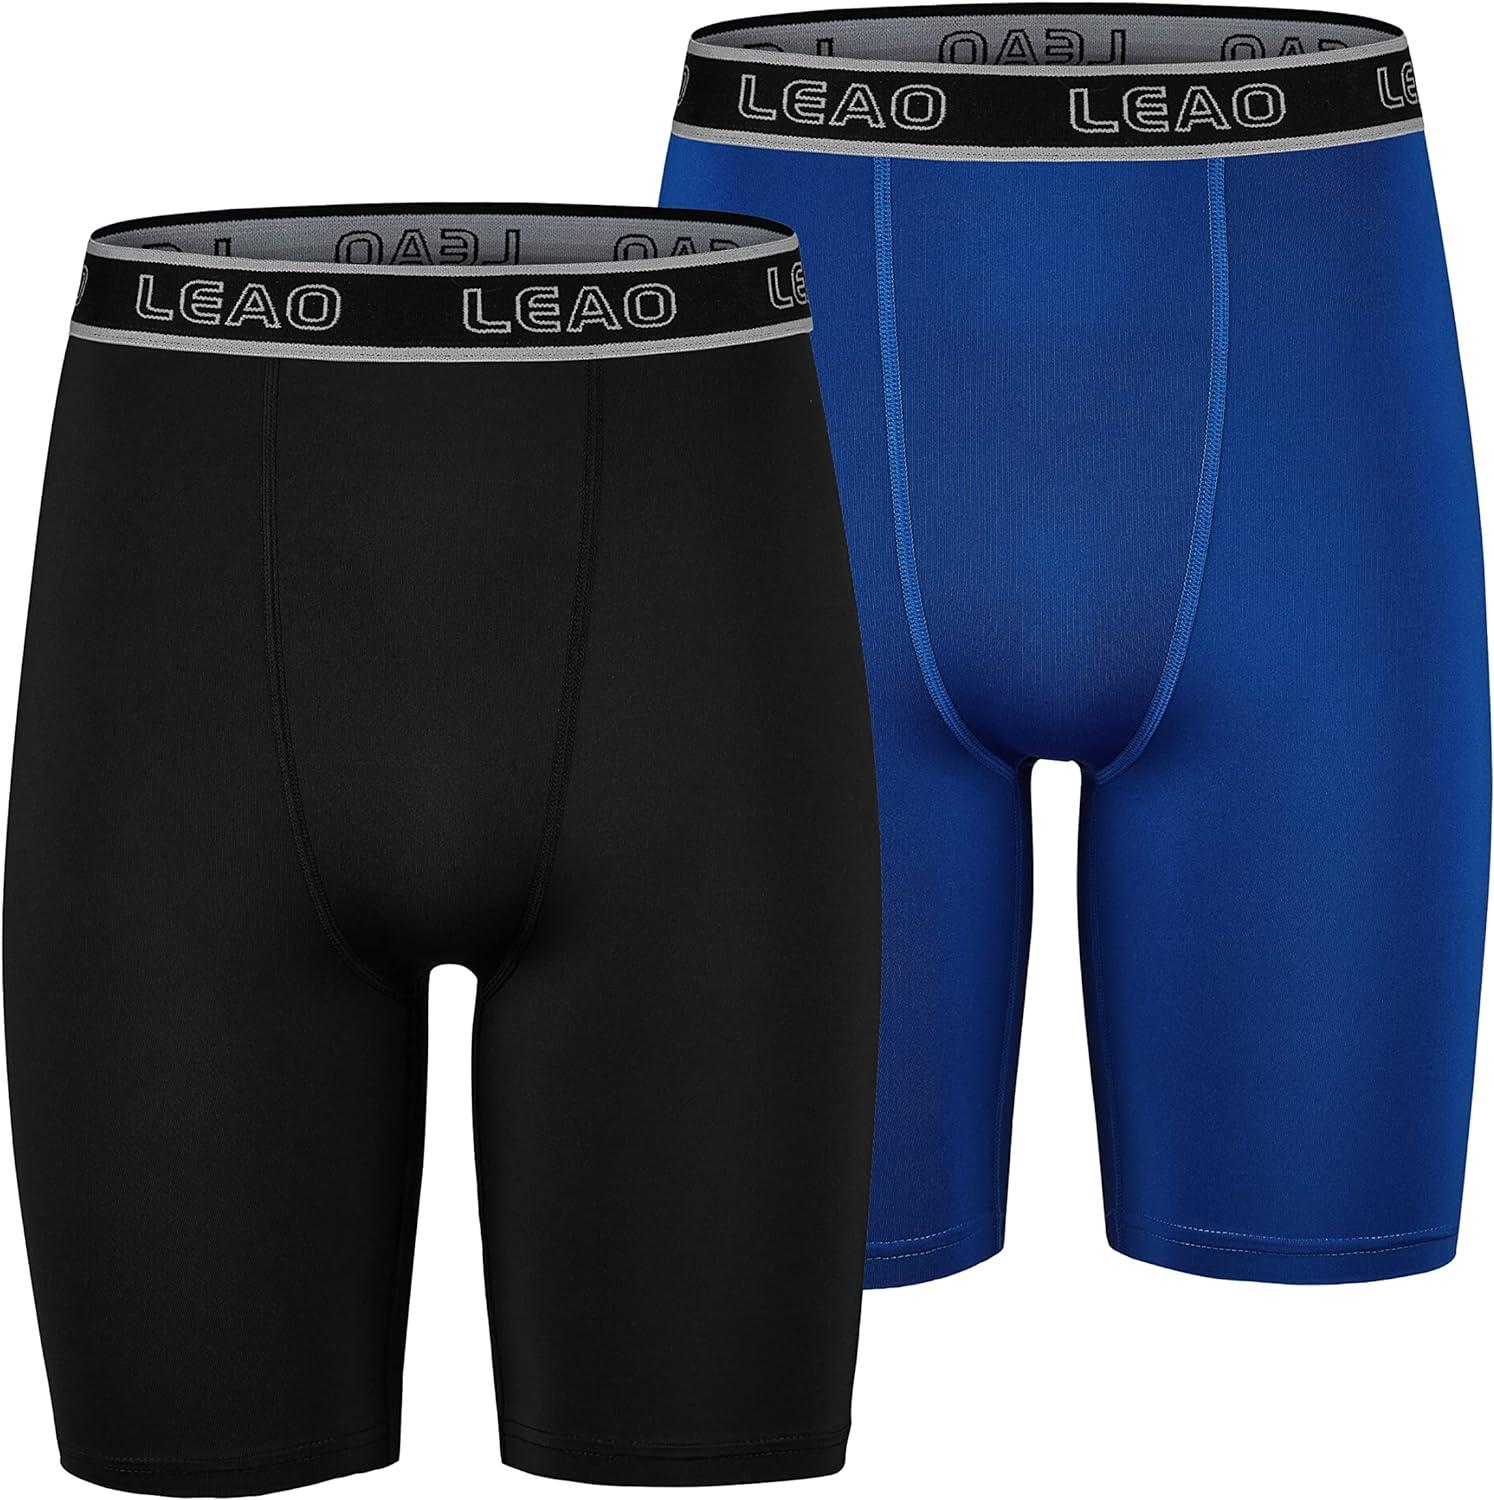 Hanes Sport Men's Performance Compression Shorts